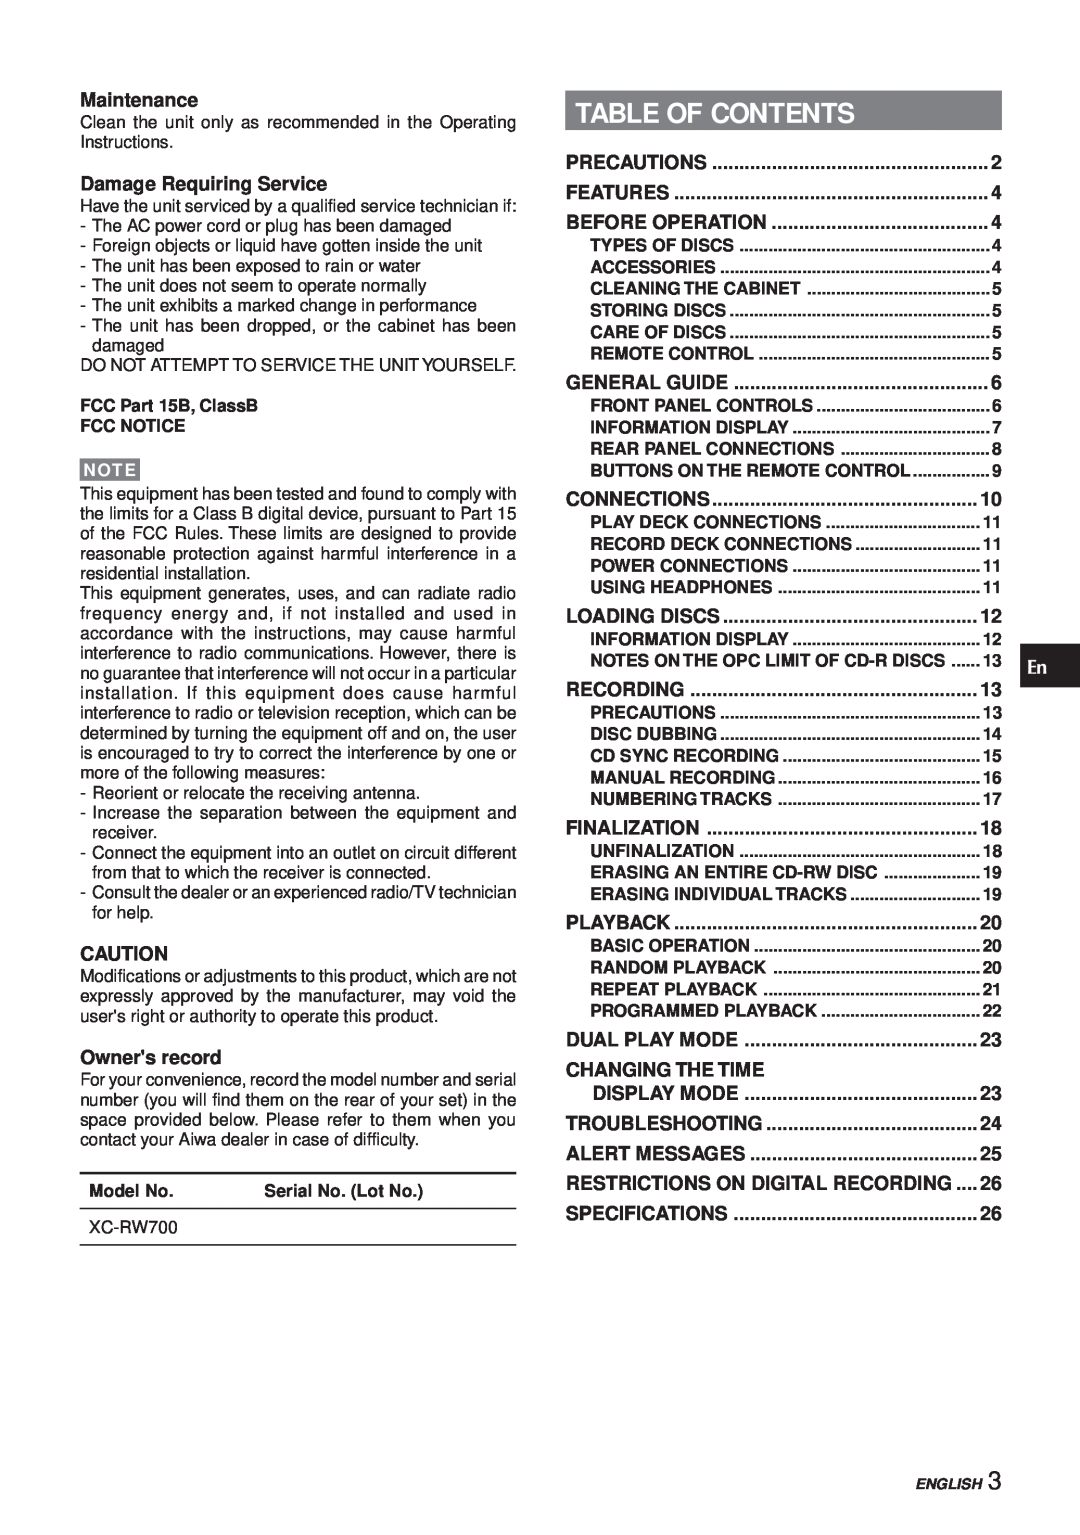 Aiwa XC-RW700 manual Table Of Contents 